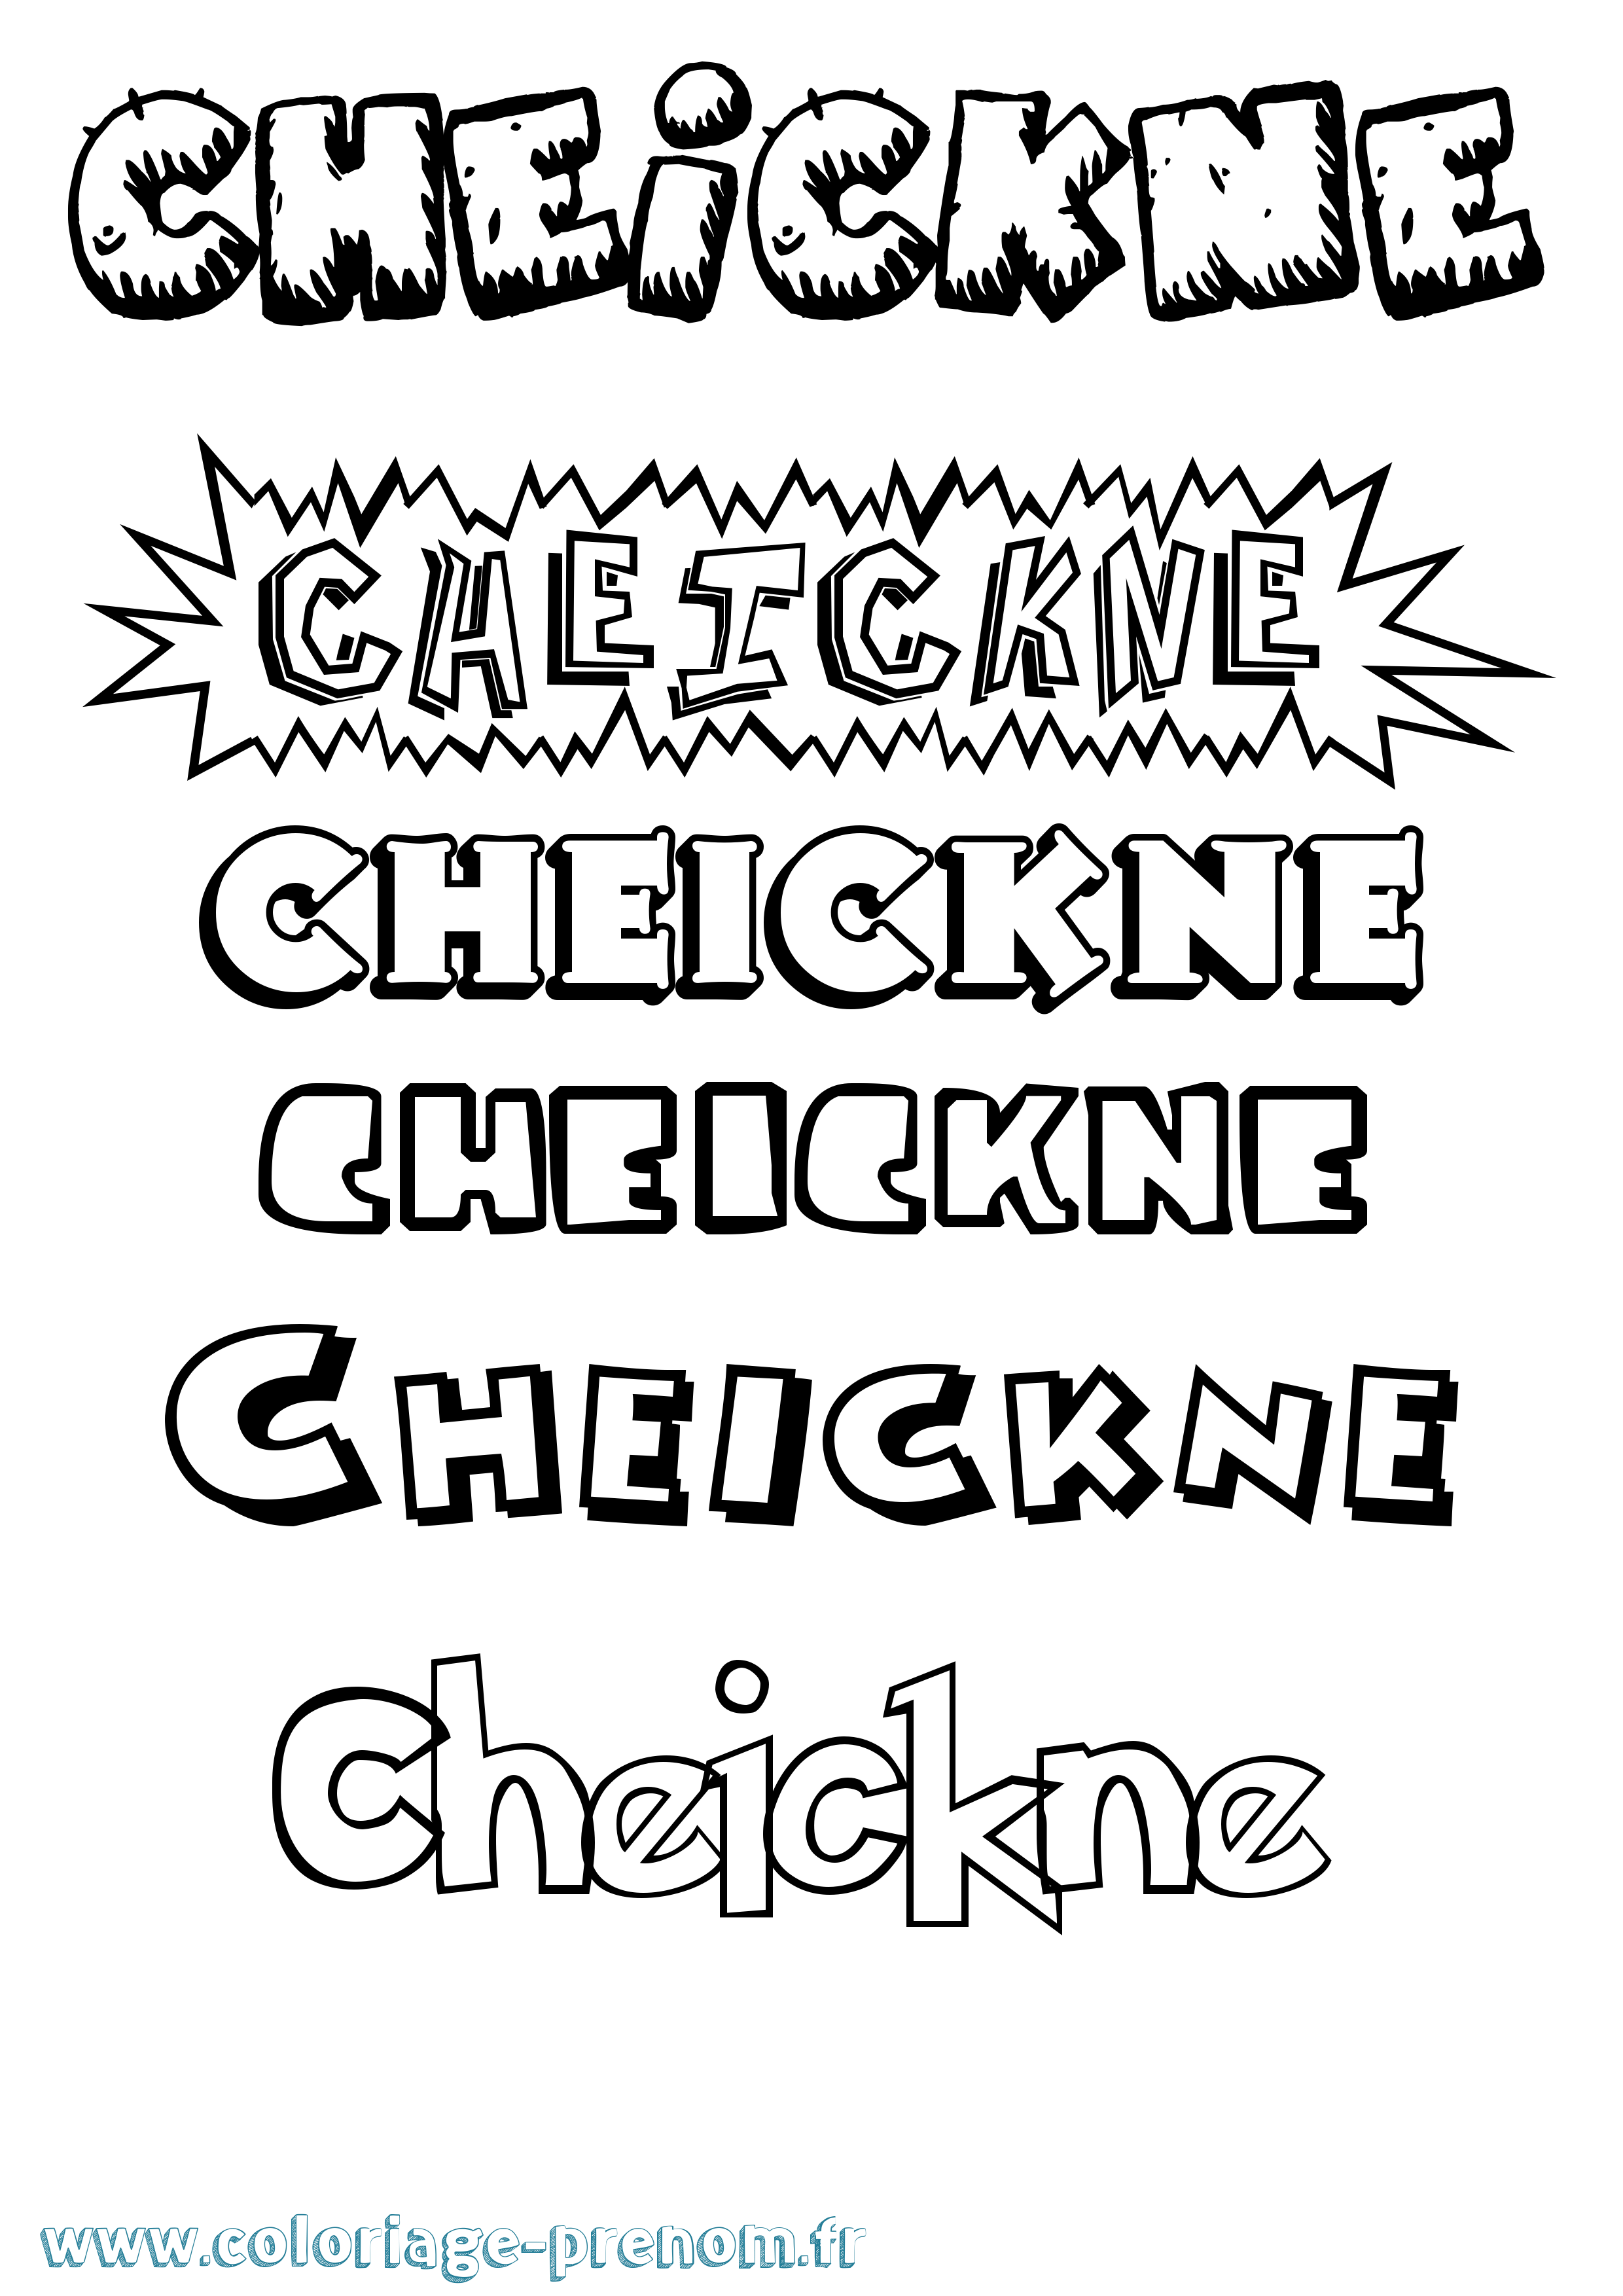 Coloriage prénom Cheickne Dessin Animé